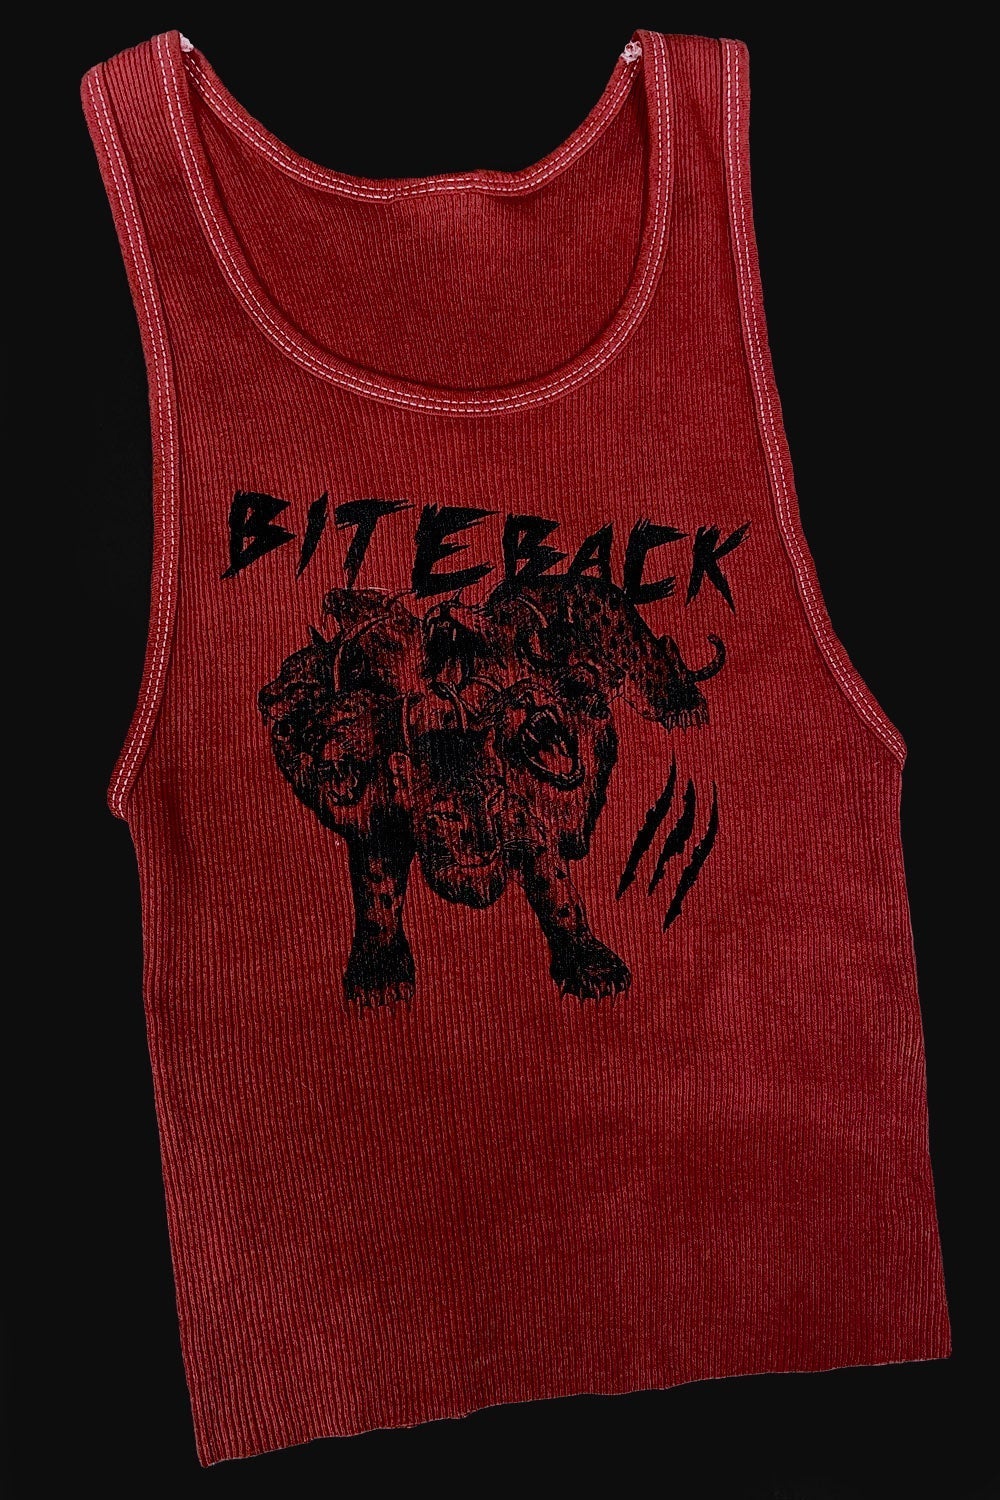 BITEBACK 7-Headed Beast Tank | Hand-Dyed Tan